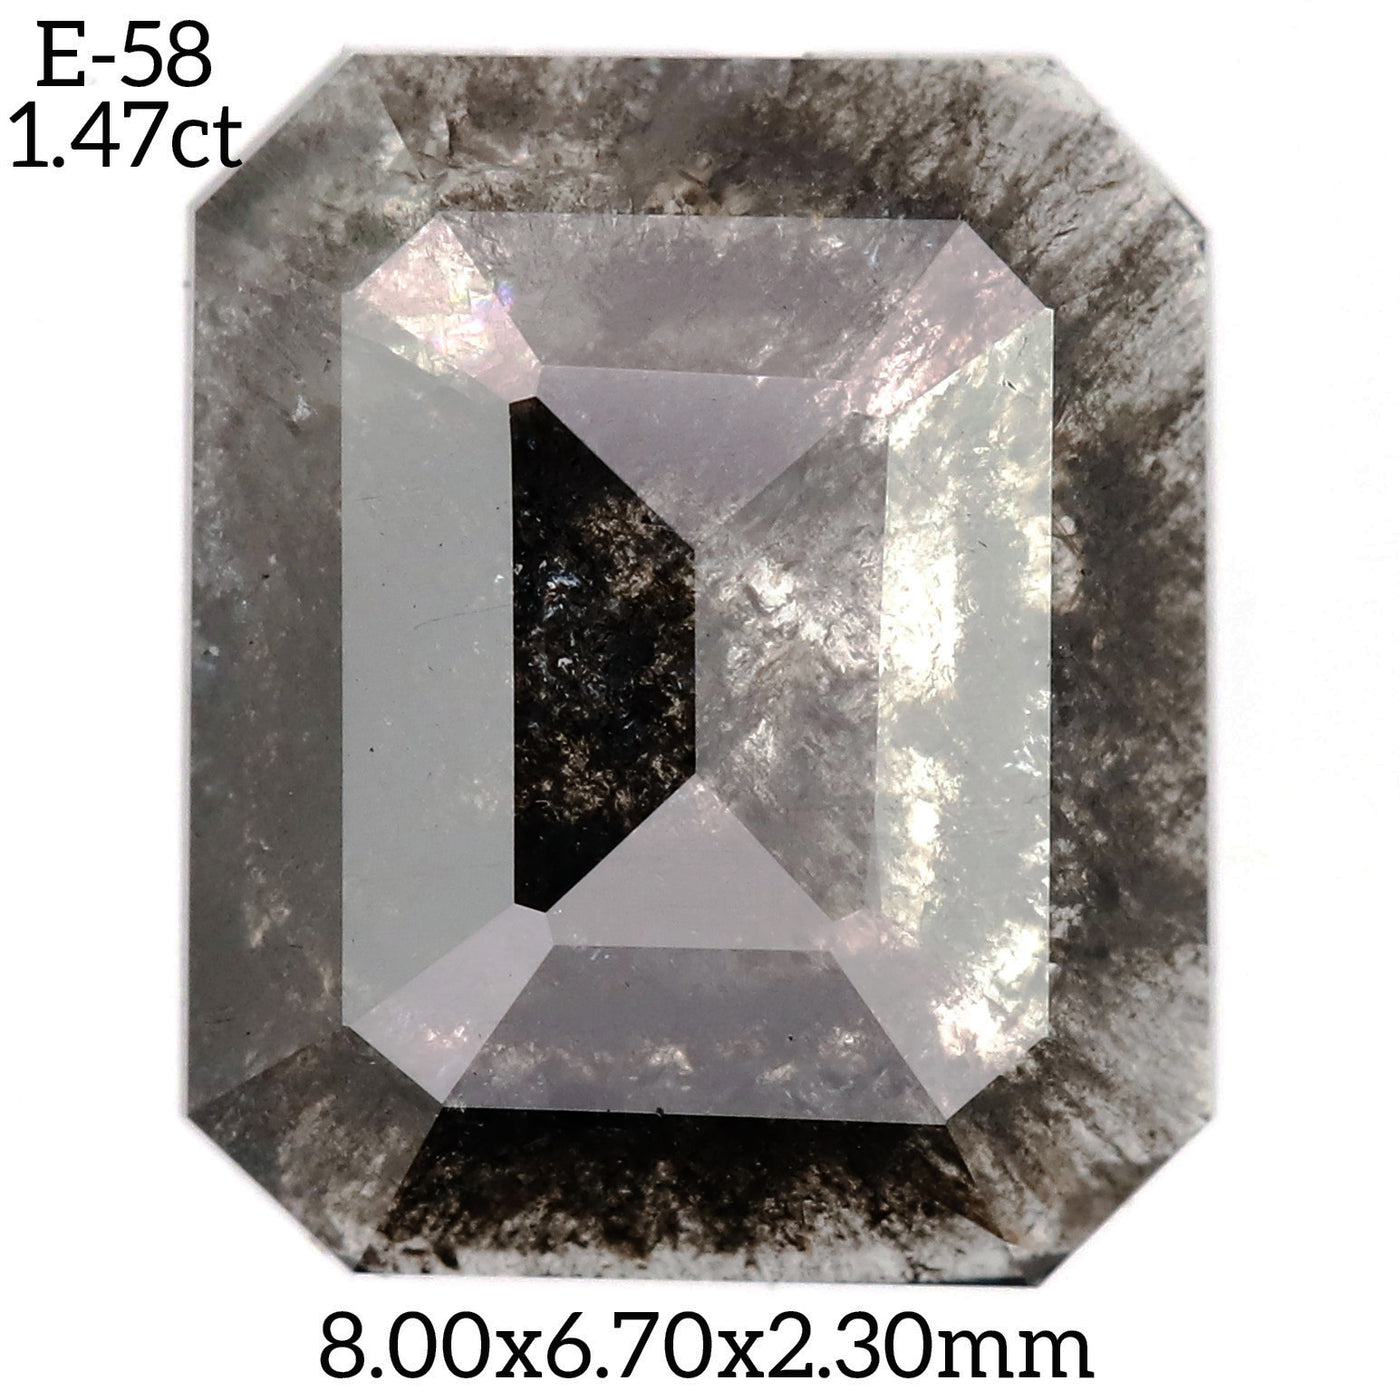 E58 - Salt and pepper emerald diamond